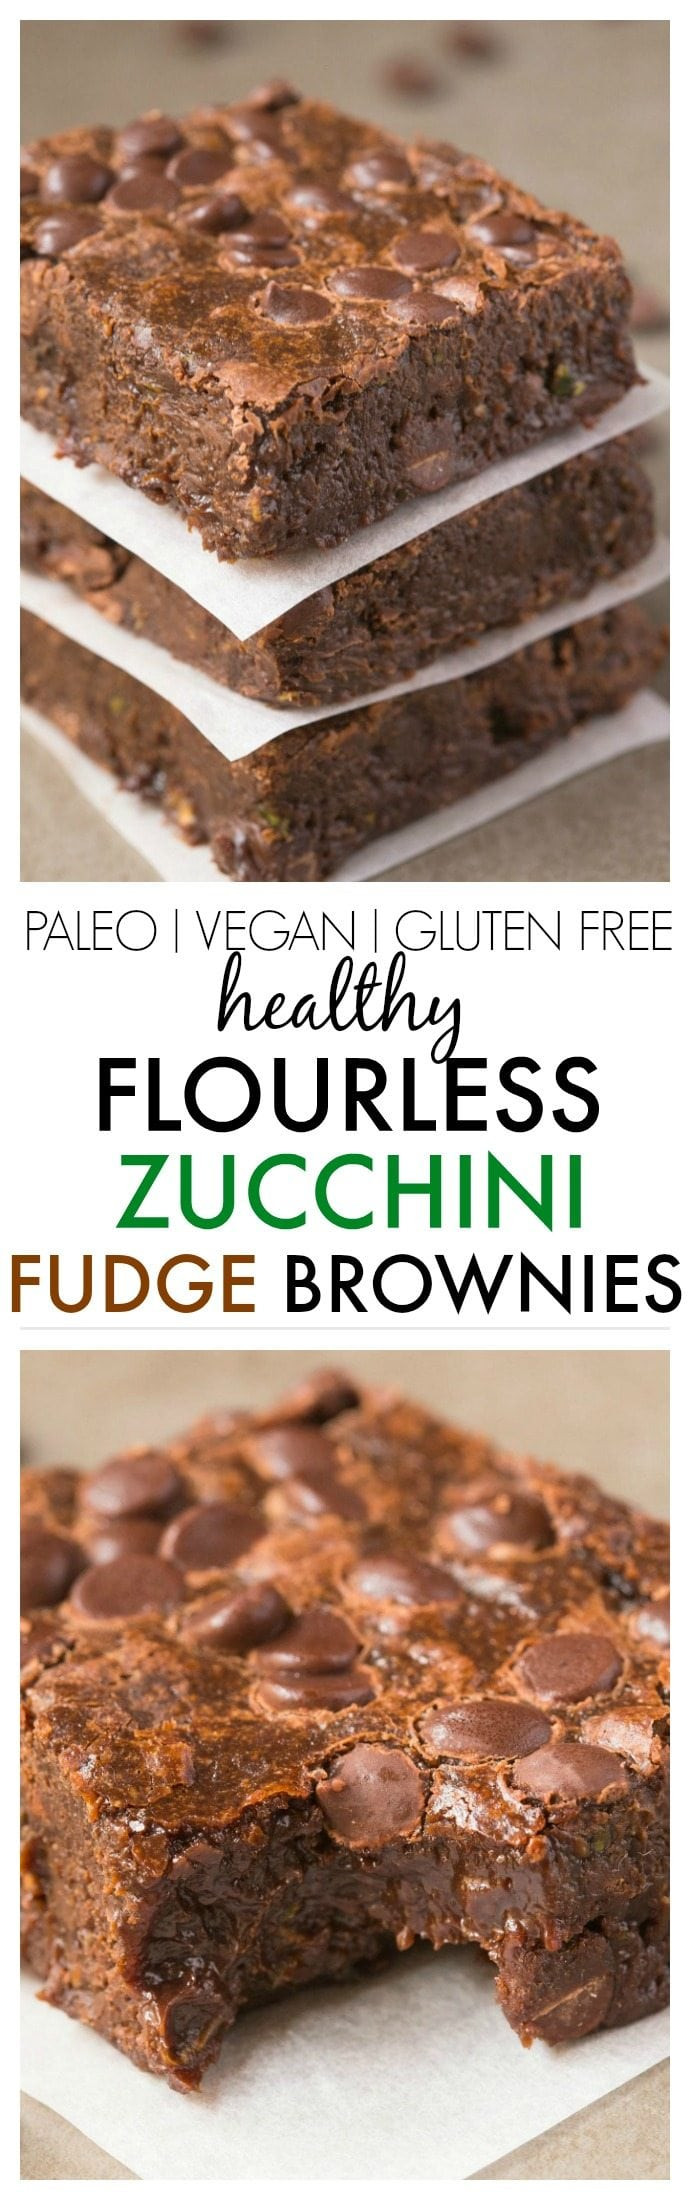 Gluten Free Zucchini Brownies
 Healthy Flourless Zucchini Fudge Brownies